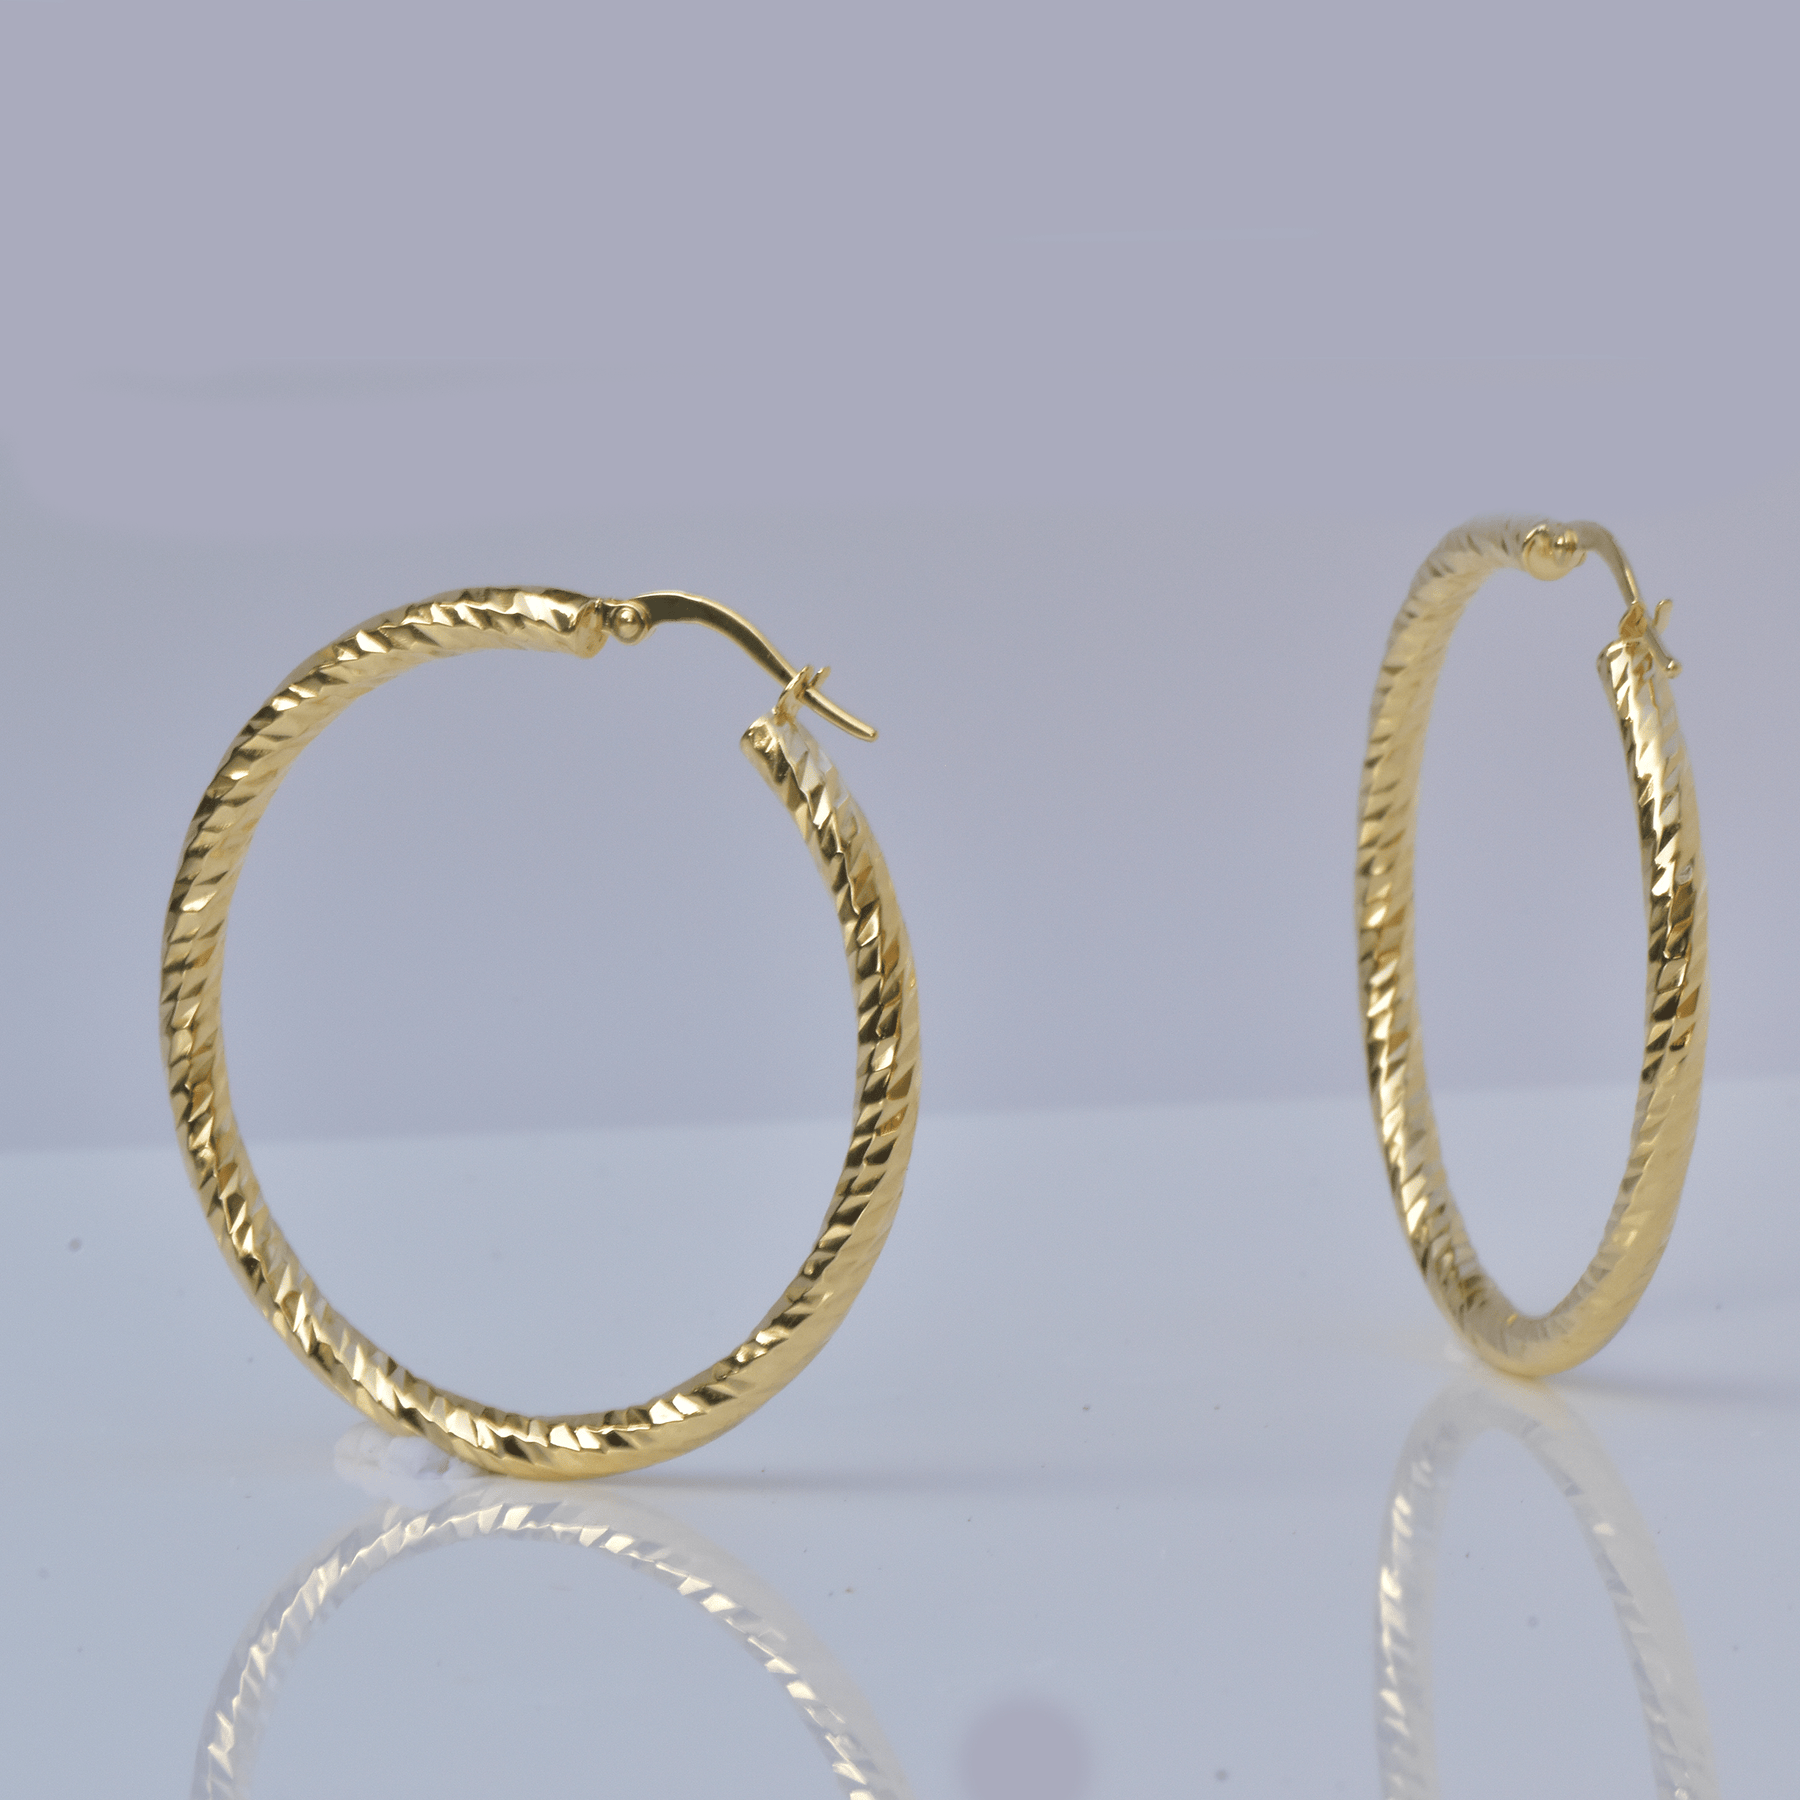 Gold Hoop Earrings -14-Karat yellow Gold, Lightweight Diamond Cut Hoops: Bright Hoops